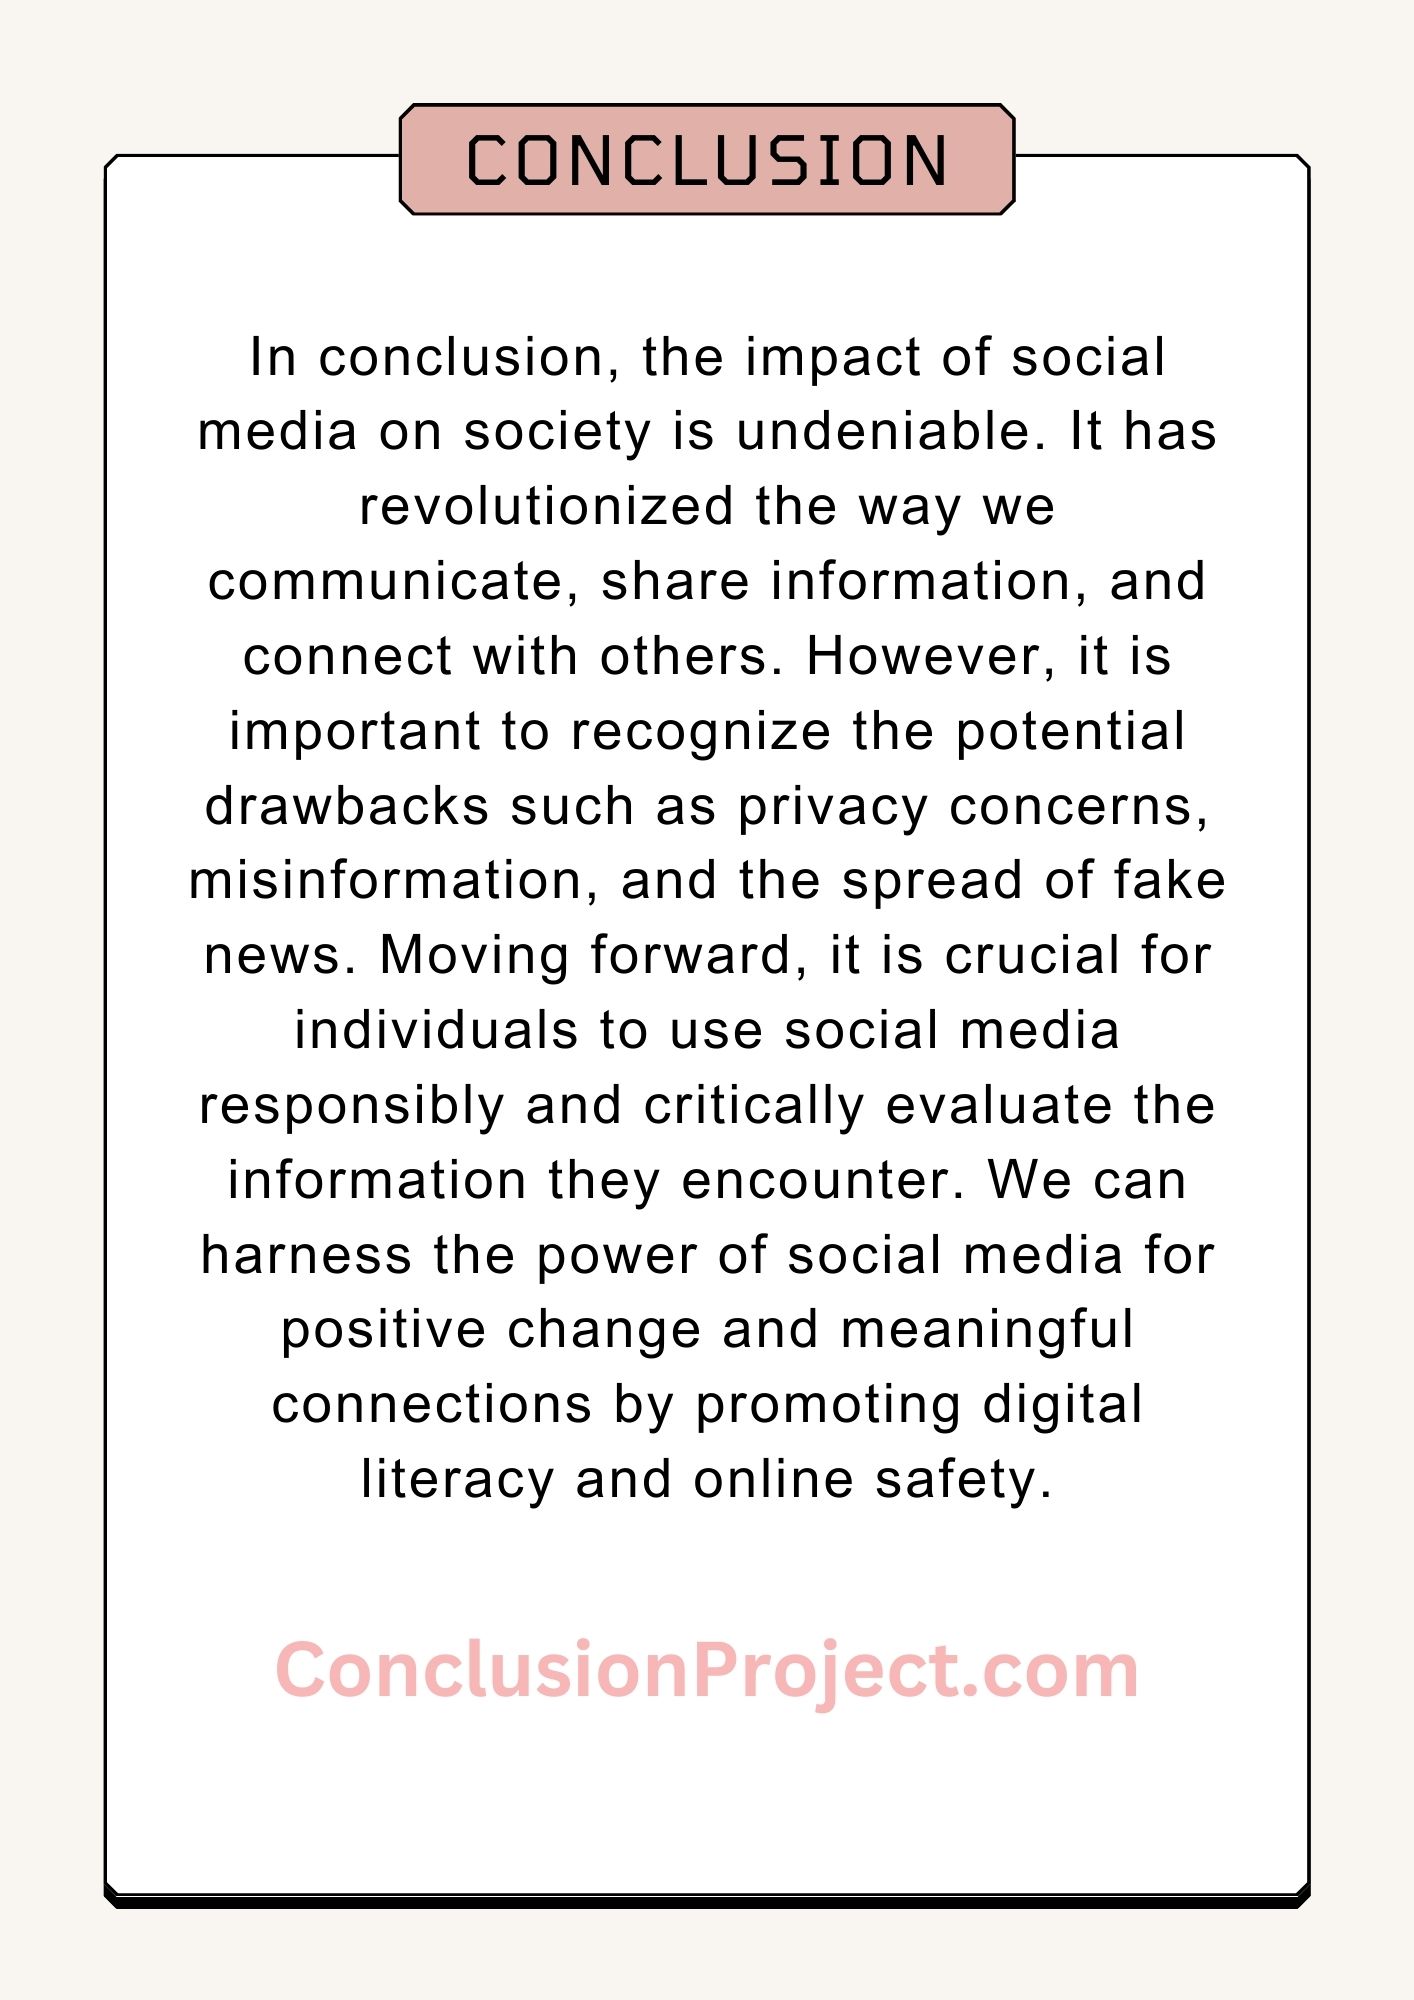 Conclusion of Social Media